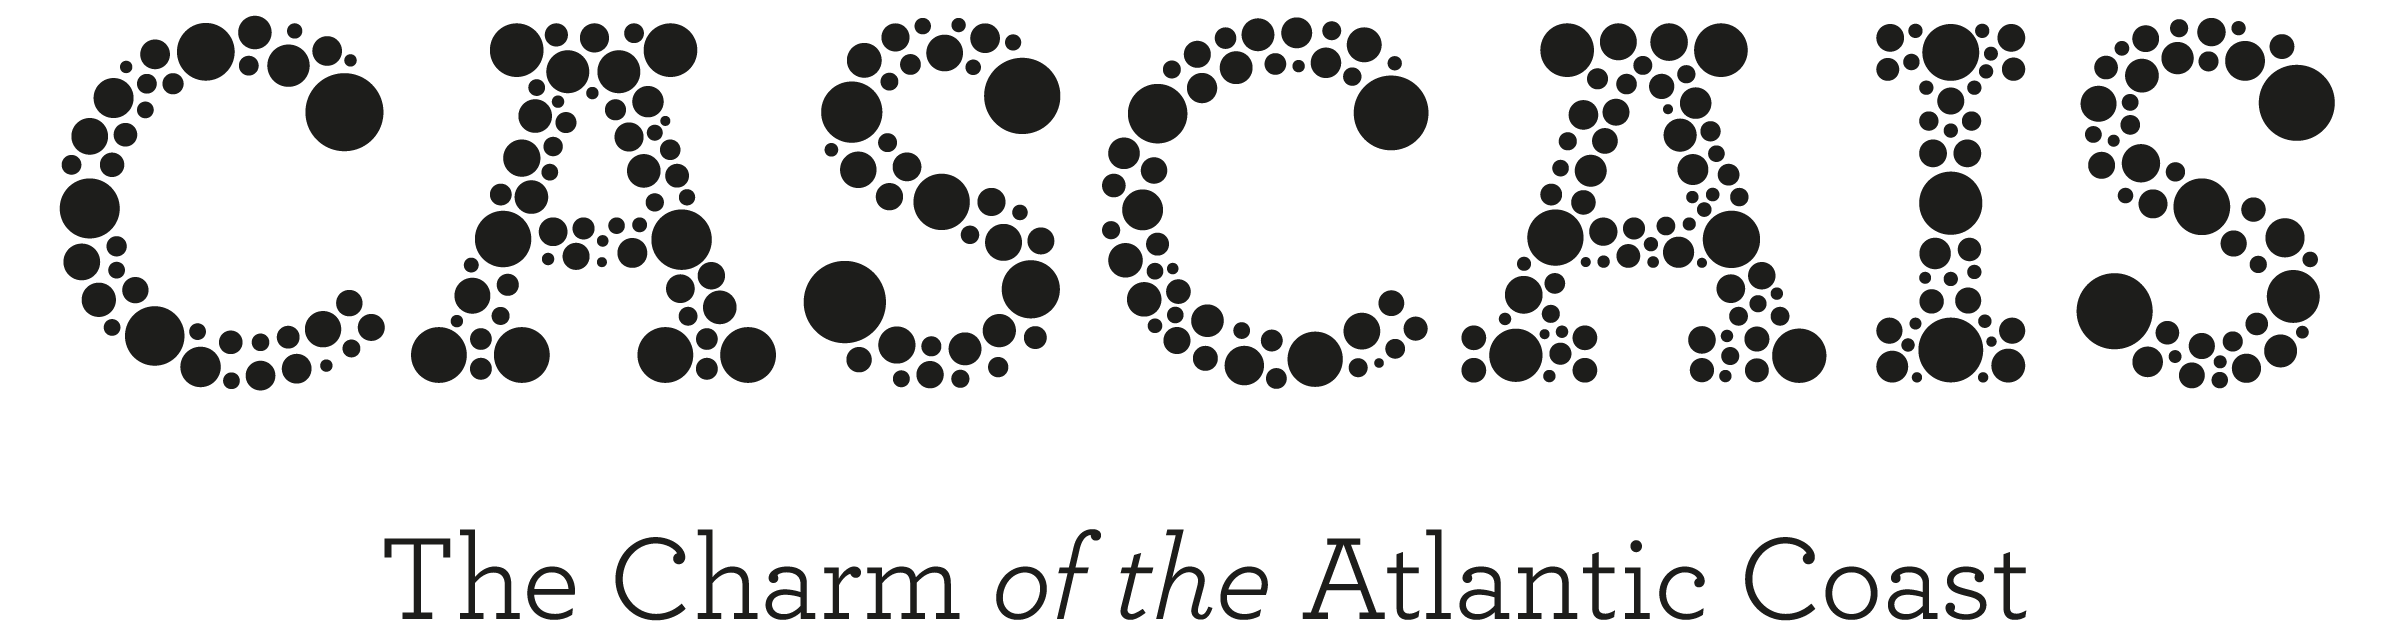 Ogami logo